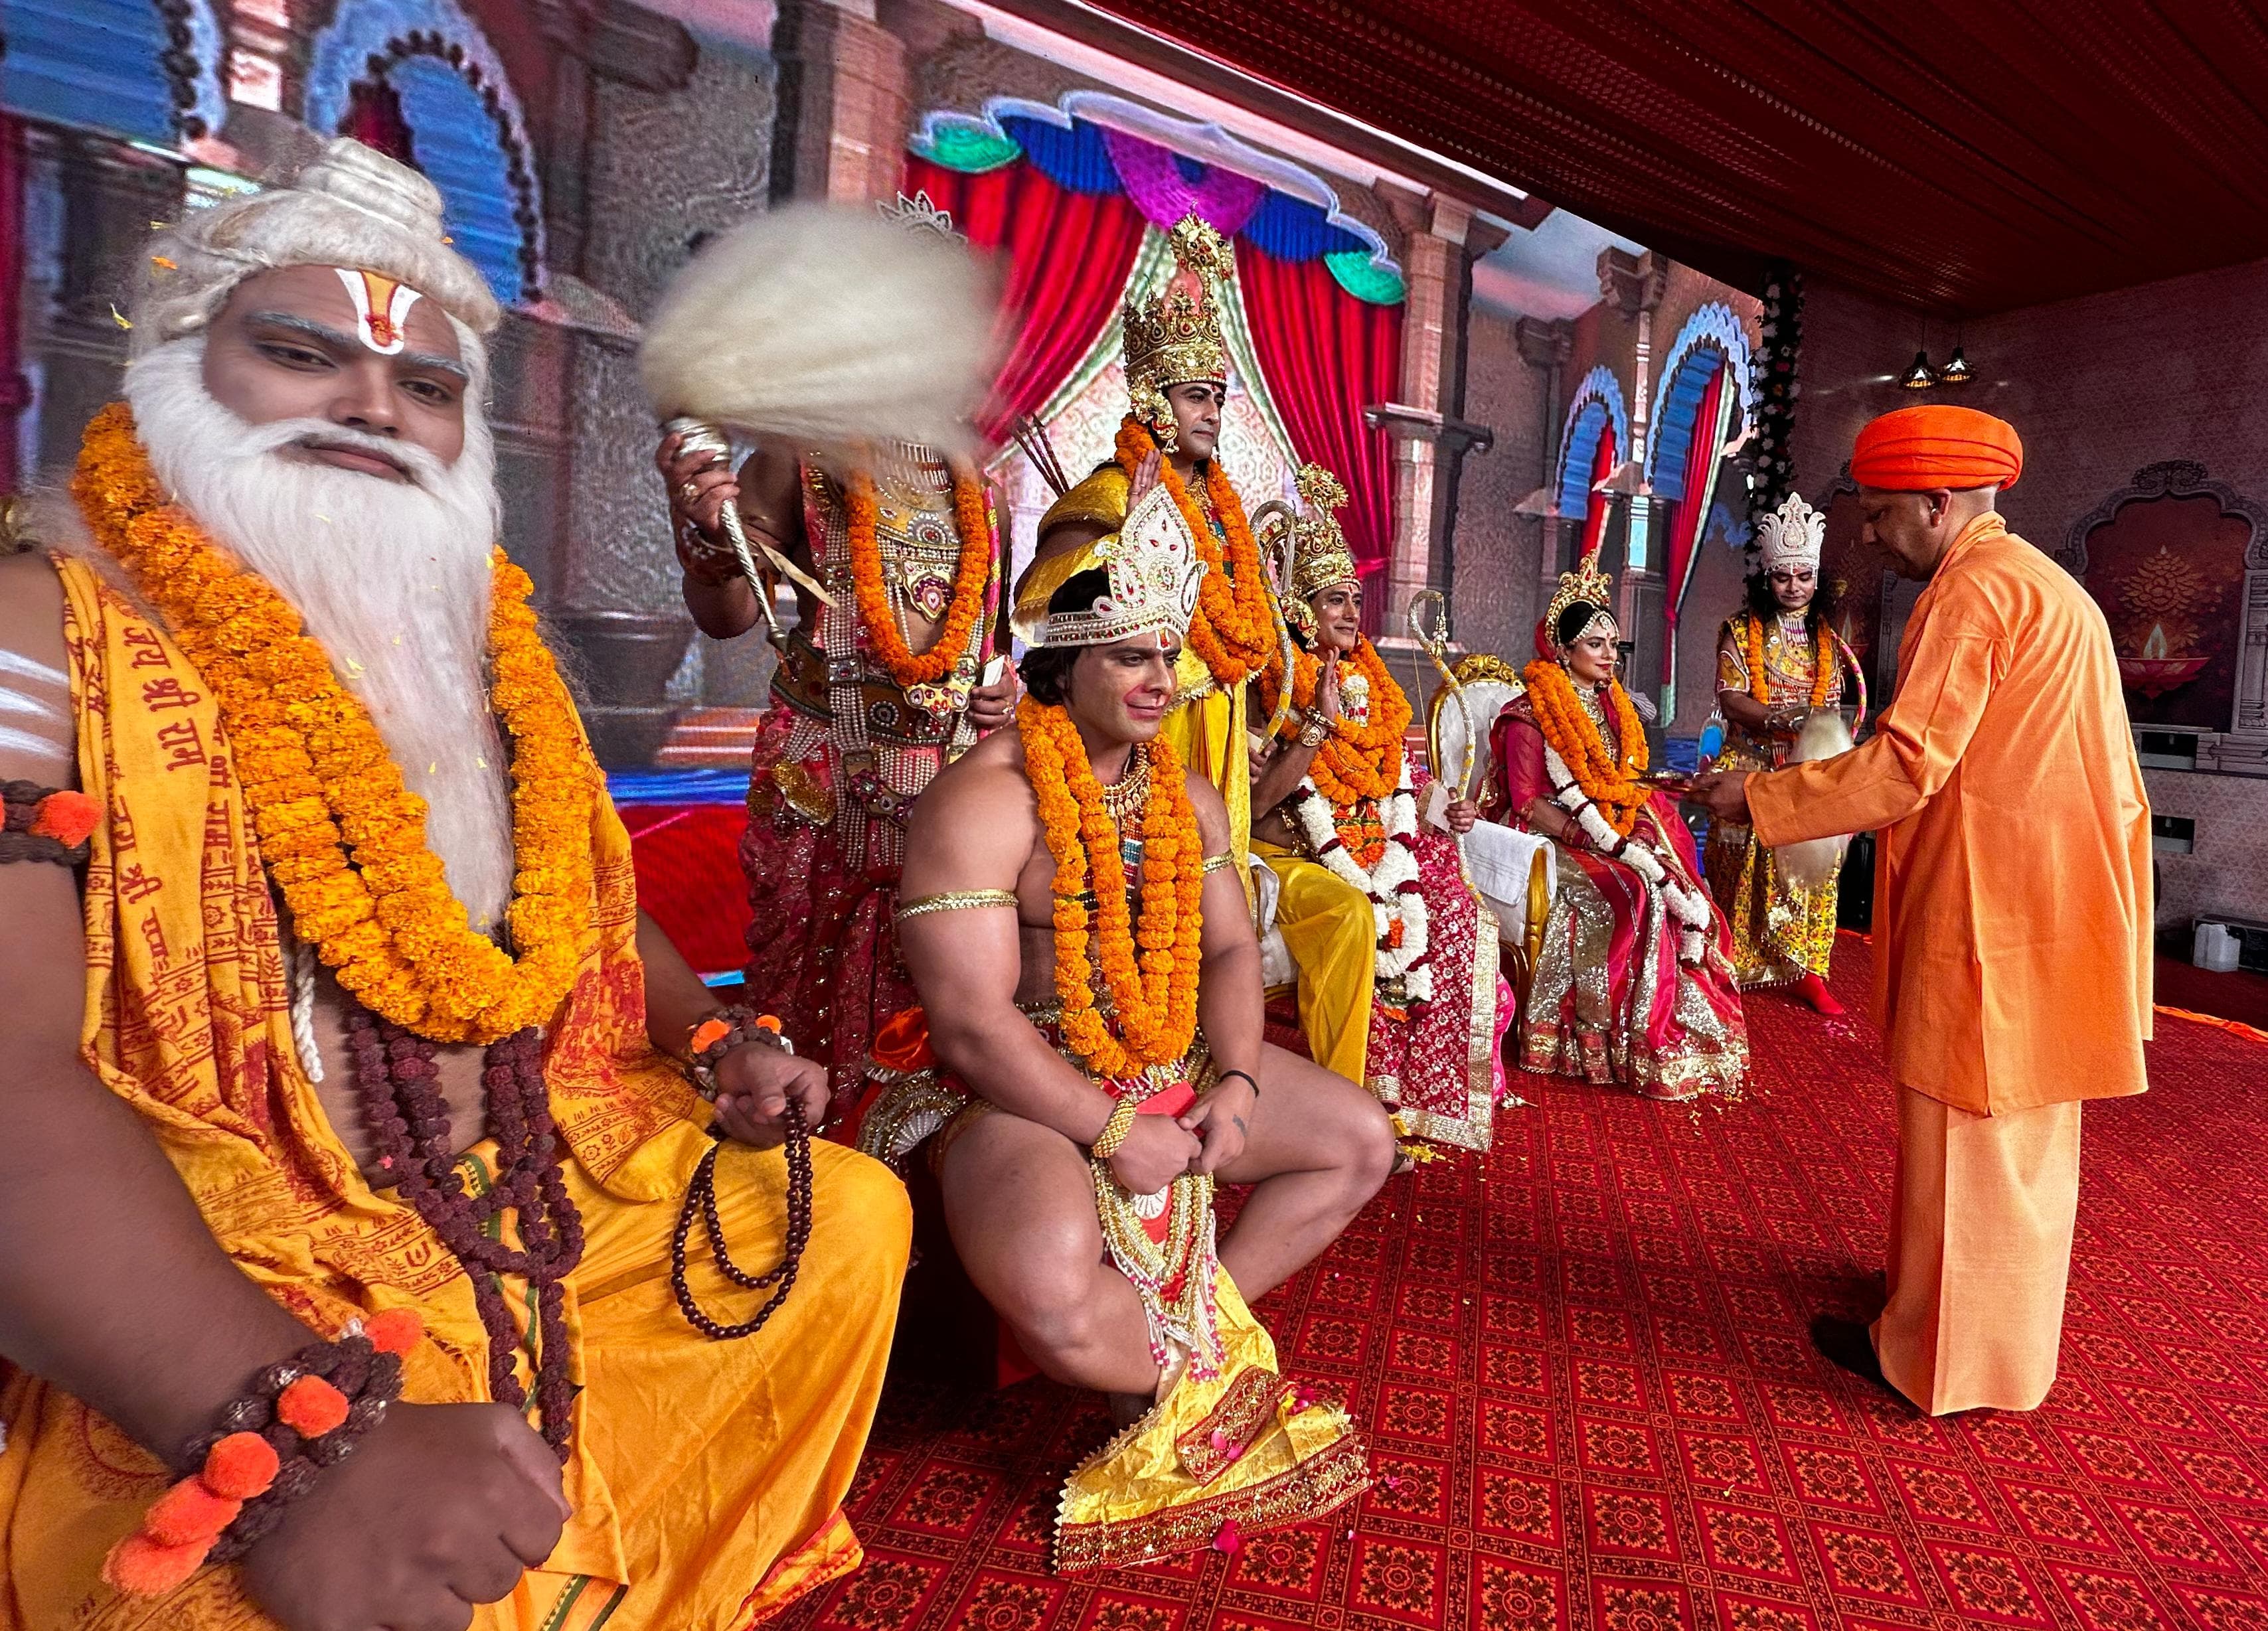 Ayodhya Deepawali: Lord Shri Ram, Mother Sita Laxman reached Ayodhya, CM Yogi pulled the chariot, performed coronation